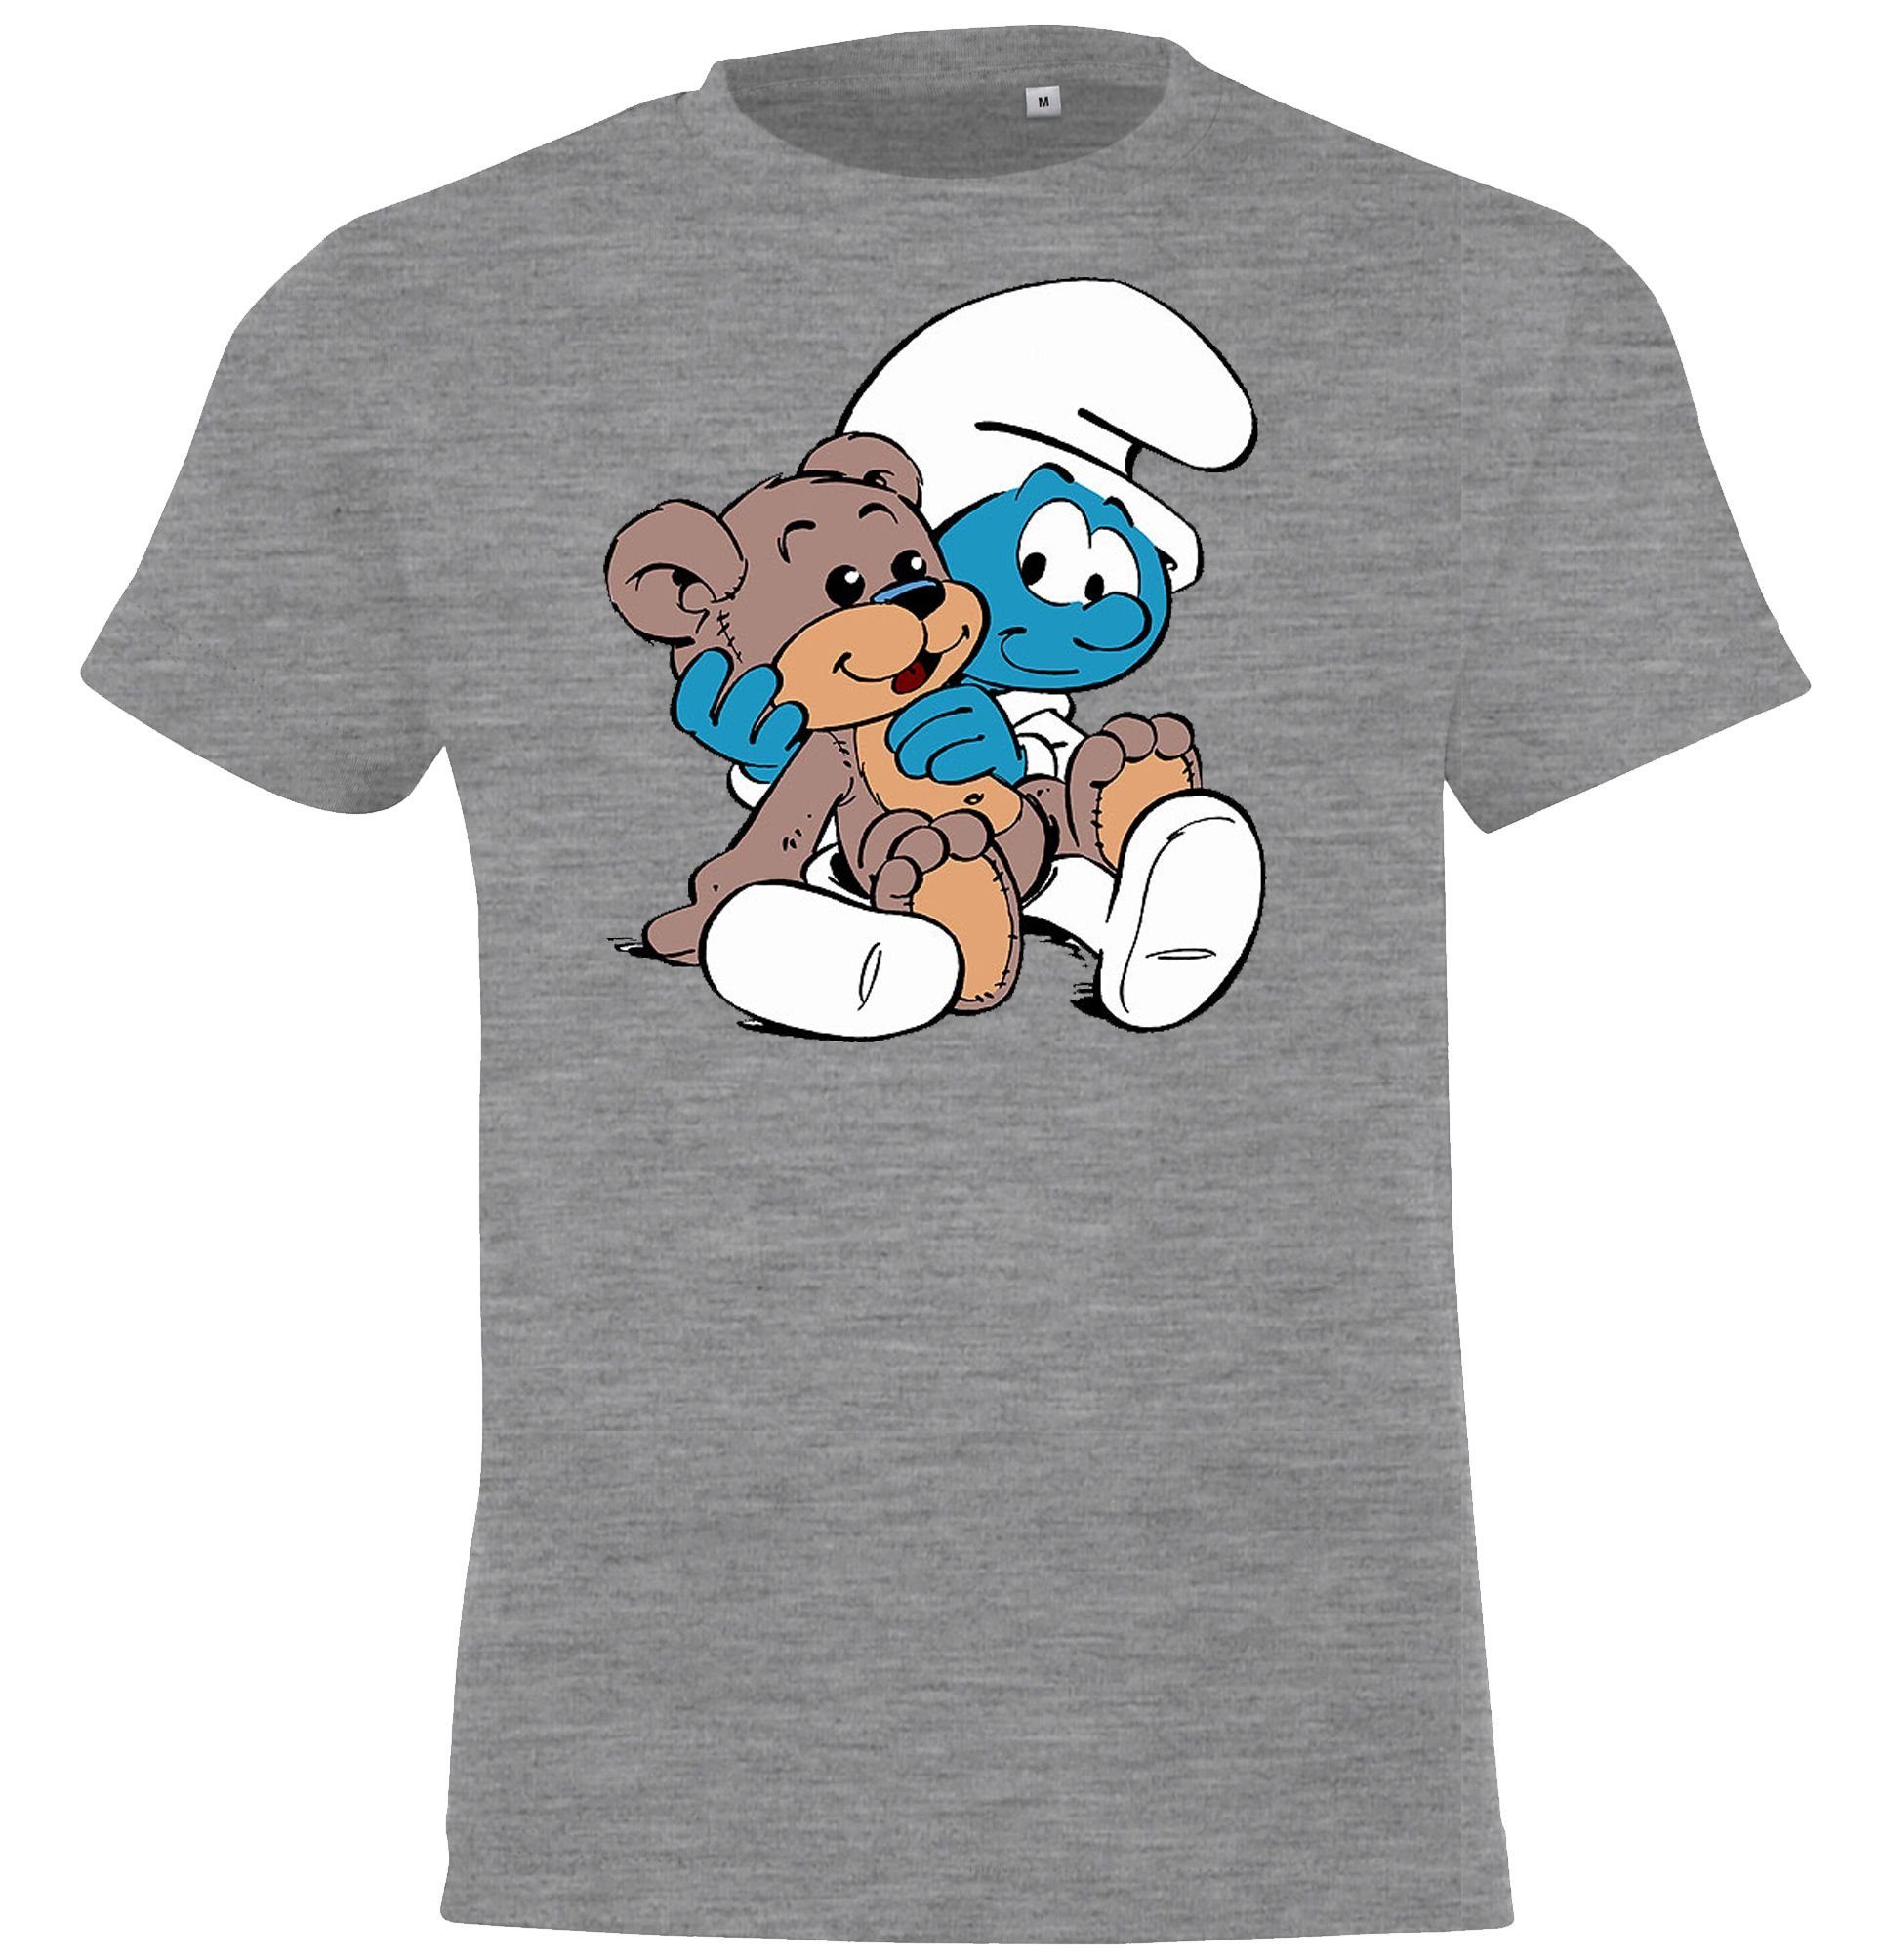 Youth Designz T-Shirt Baby Grau Front T-Shirt Print trendigem Mit Schlumpf Kinder Modell